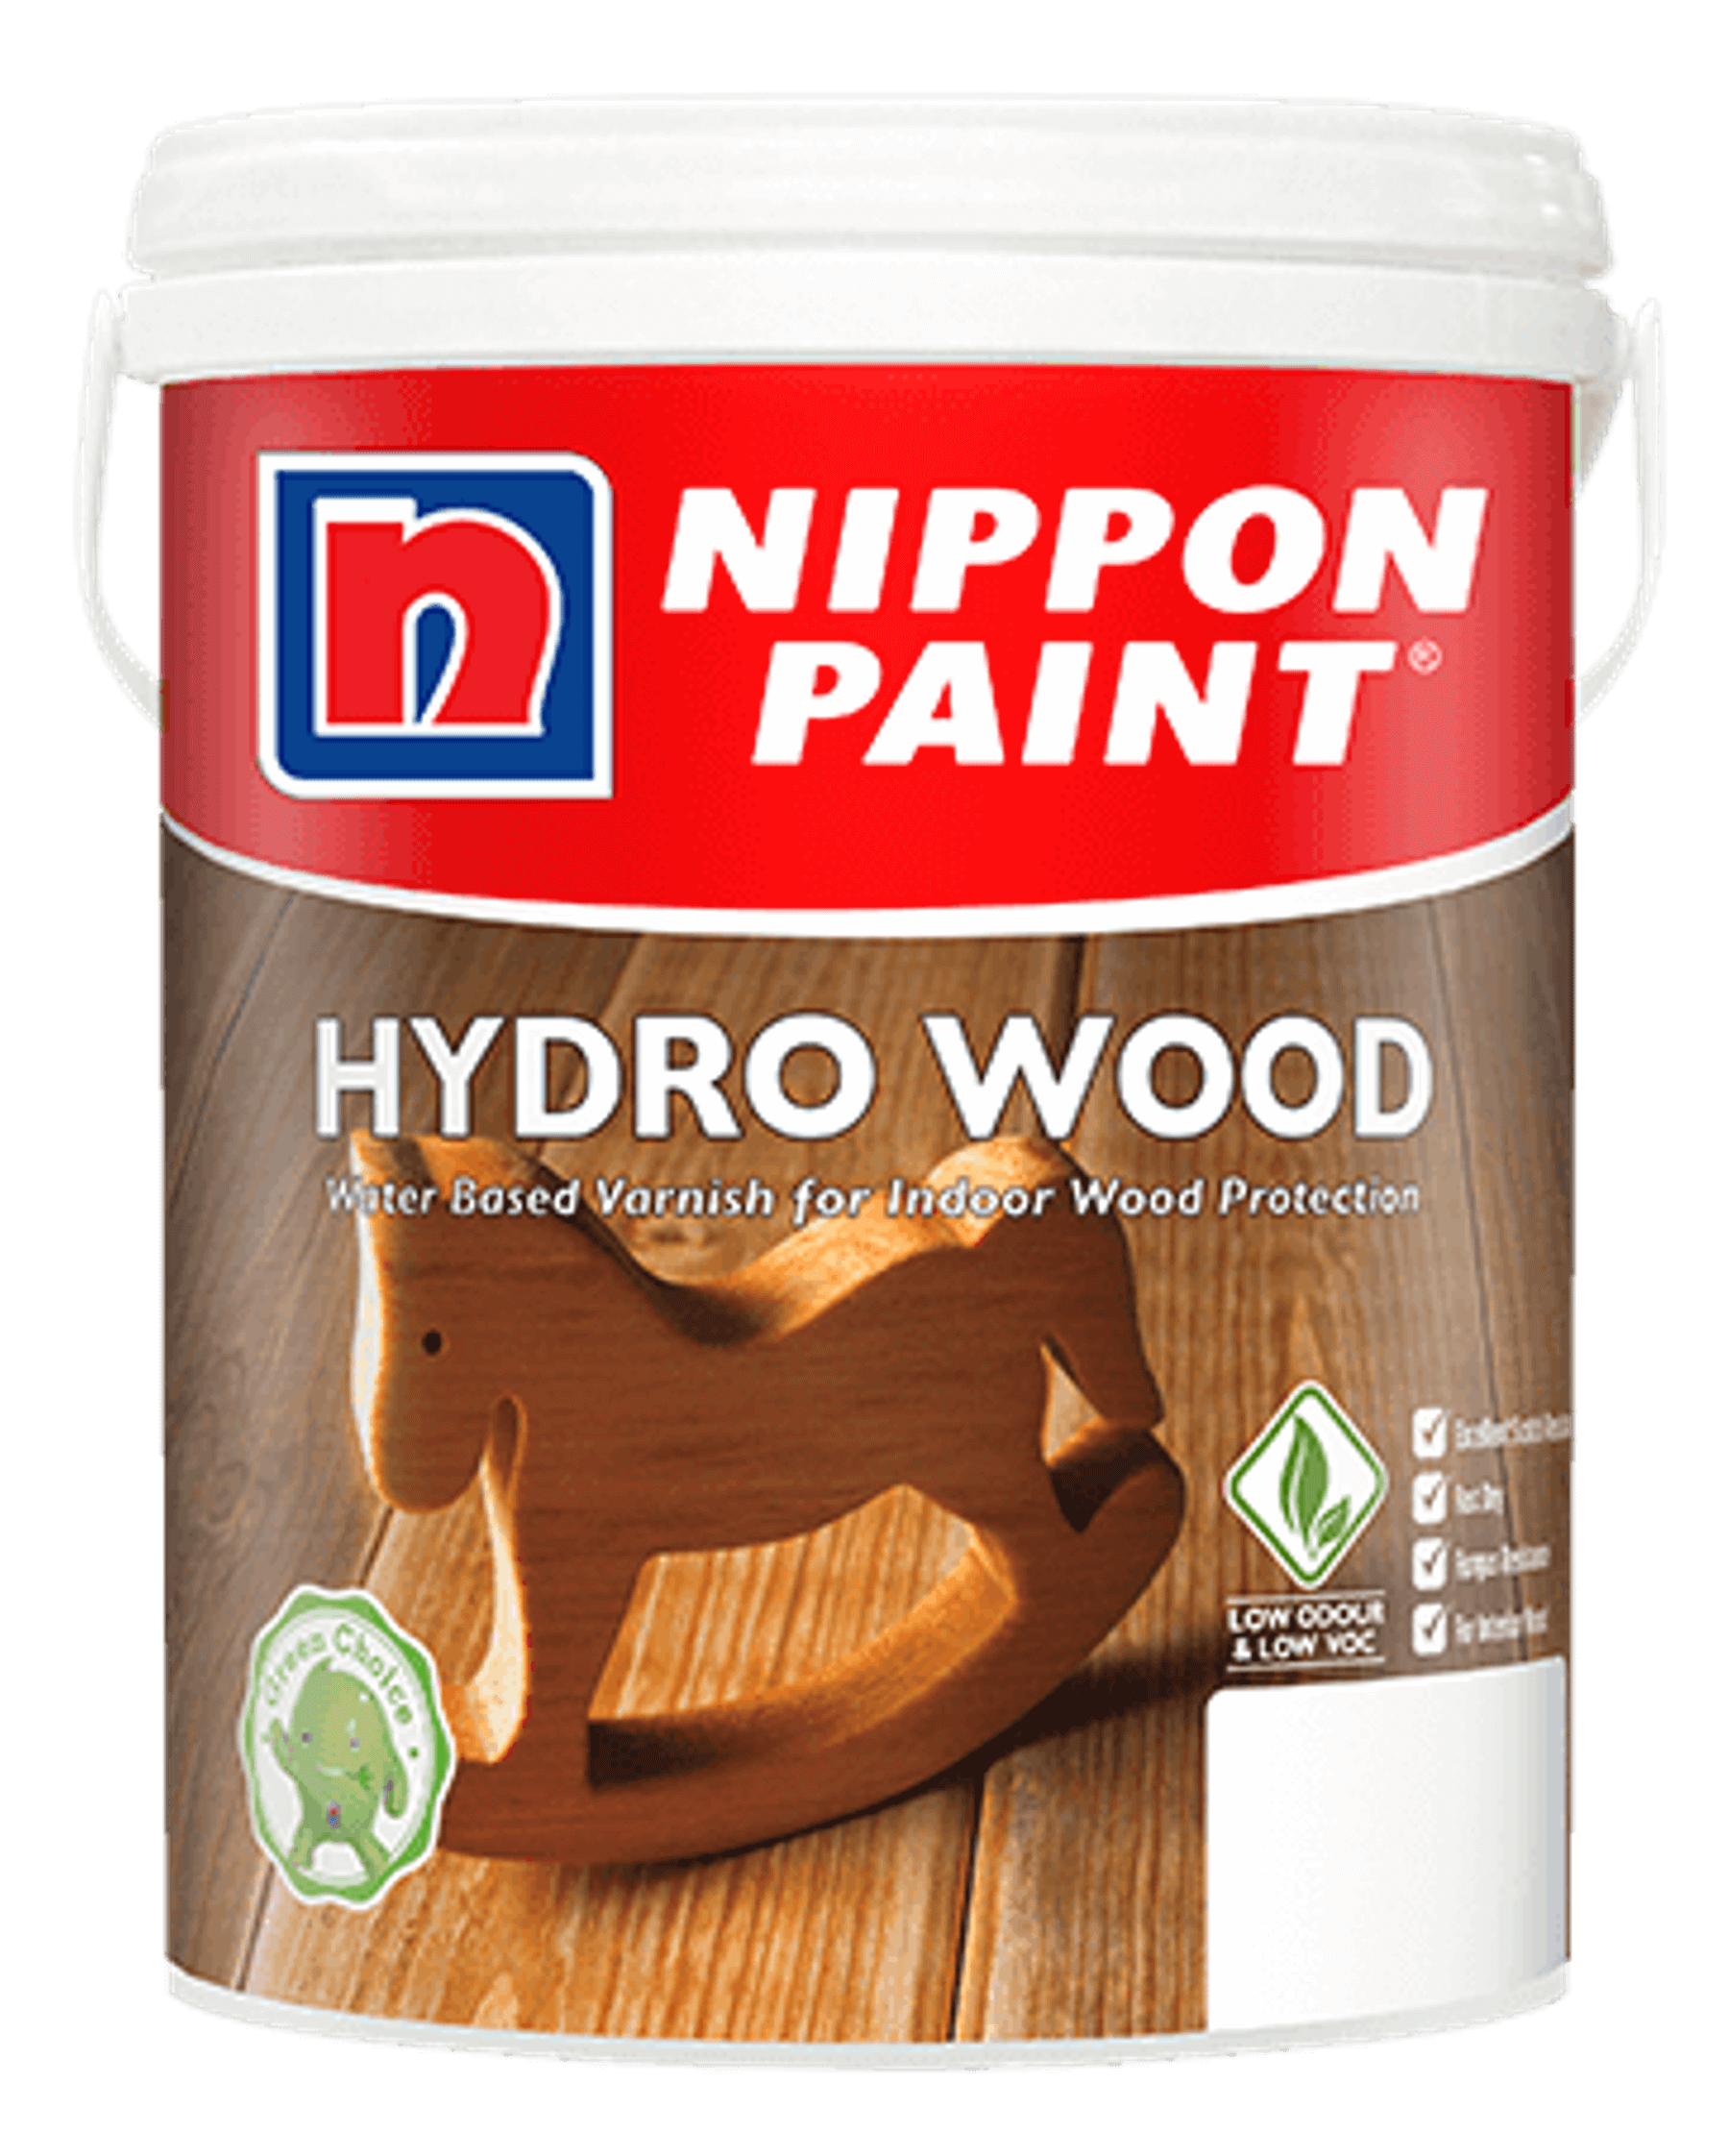 Hydro Wood